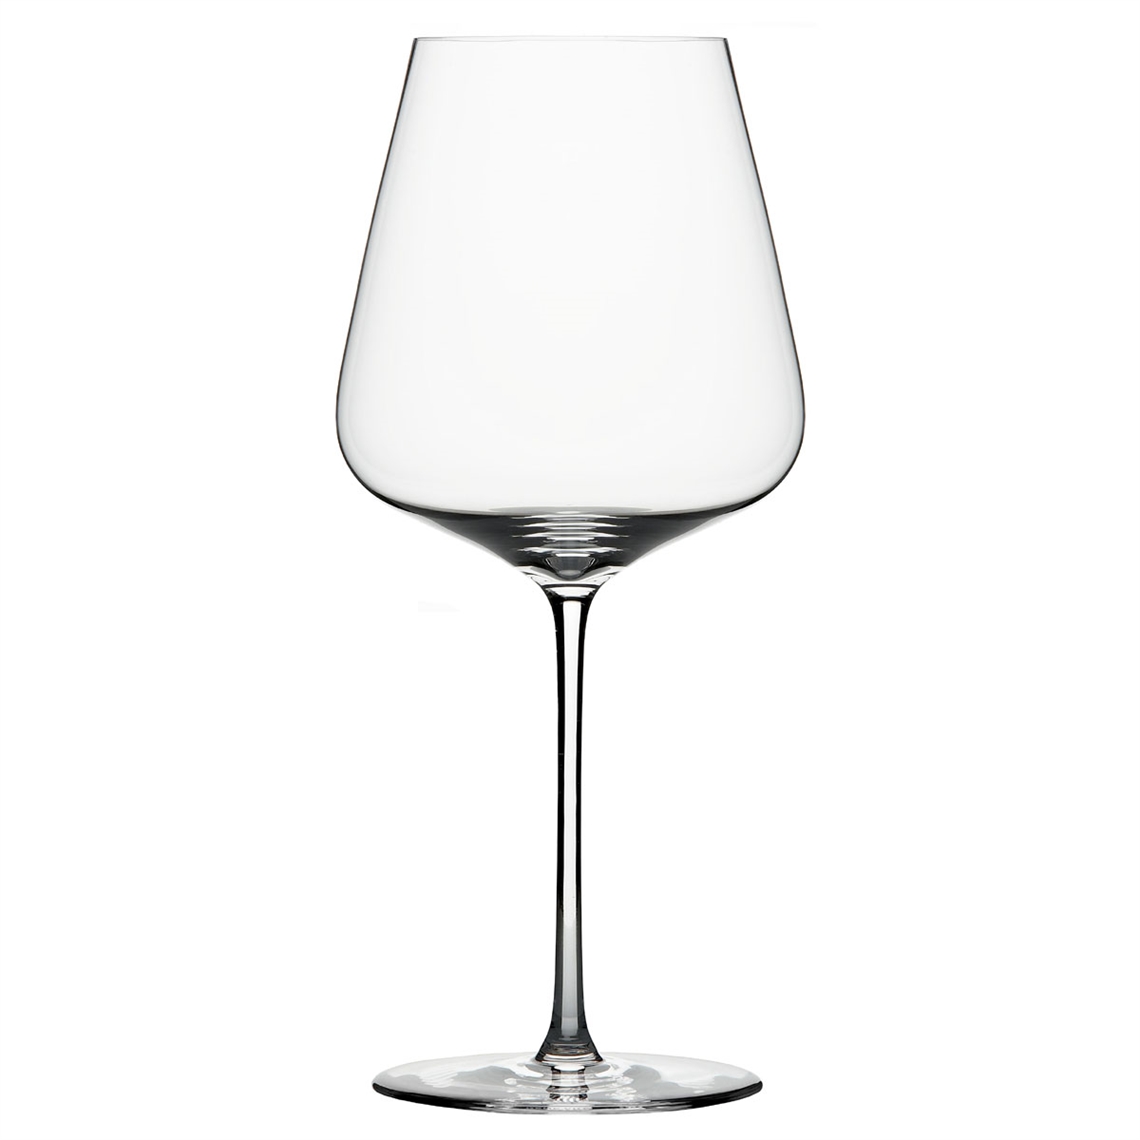 View more white wine glasses from our Premium Mouth Blown Glassware range